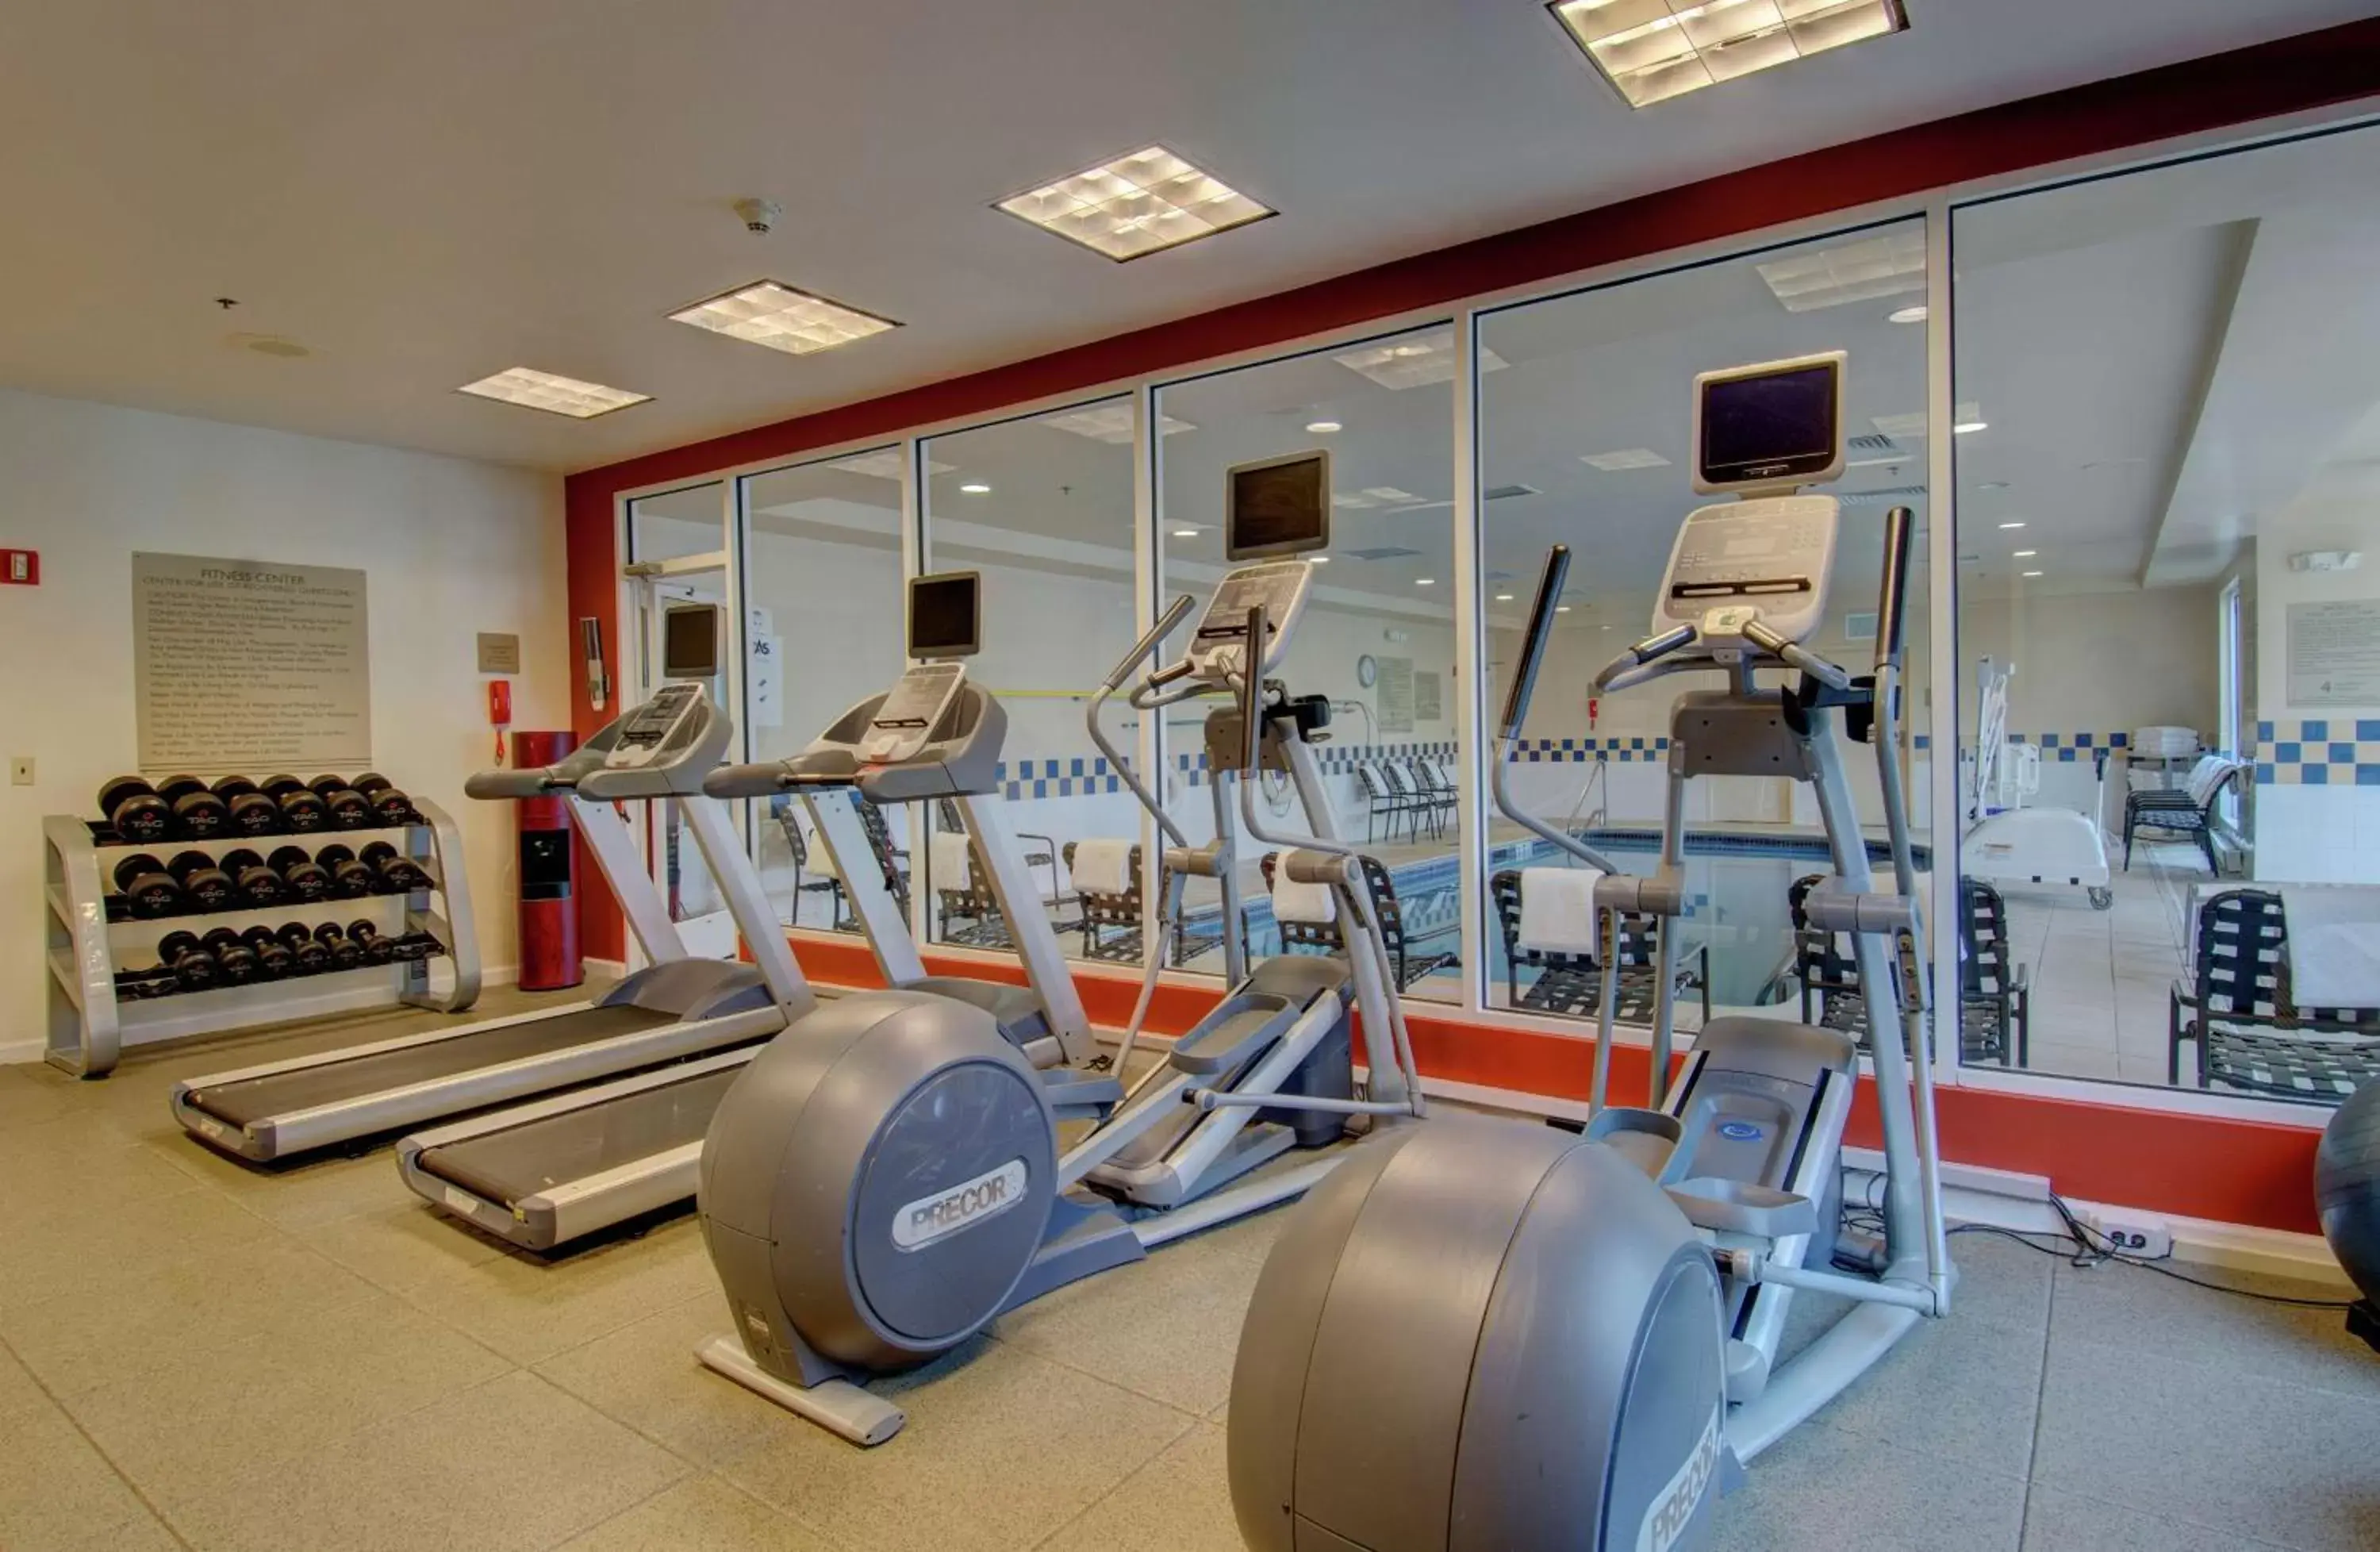 Fitness centre/facilities, Fitness Center/Facilities in Hilton Garden Inn Norwalk